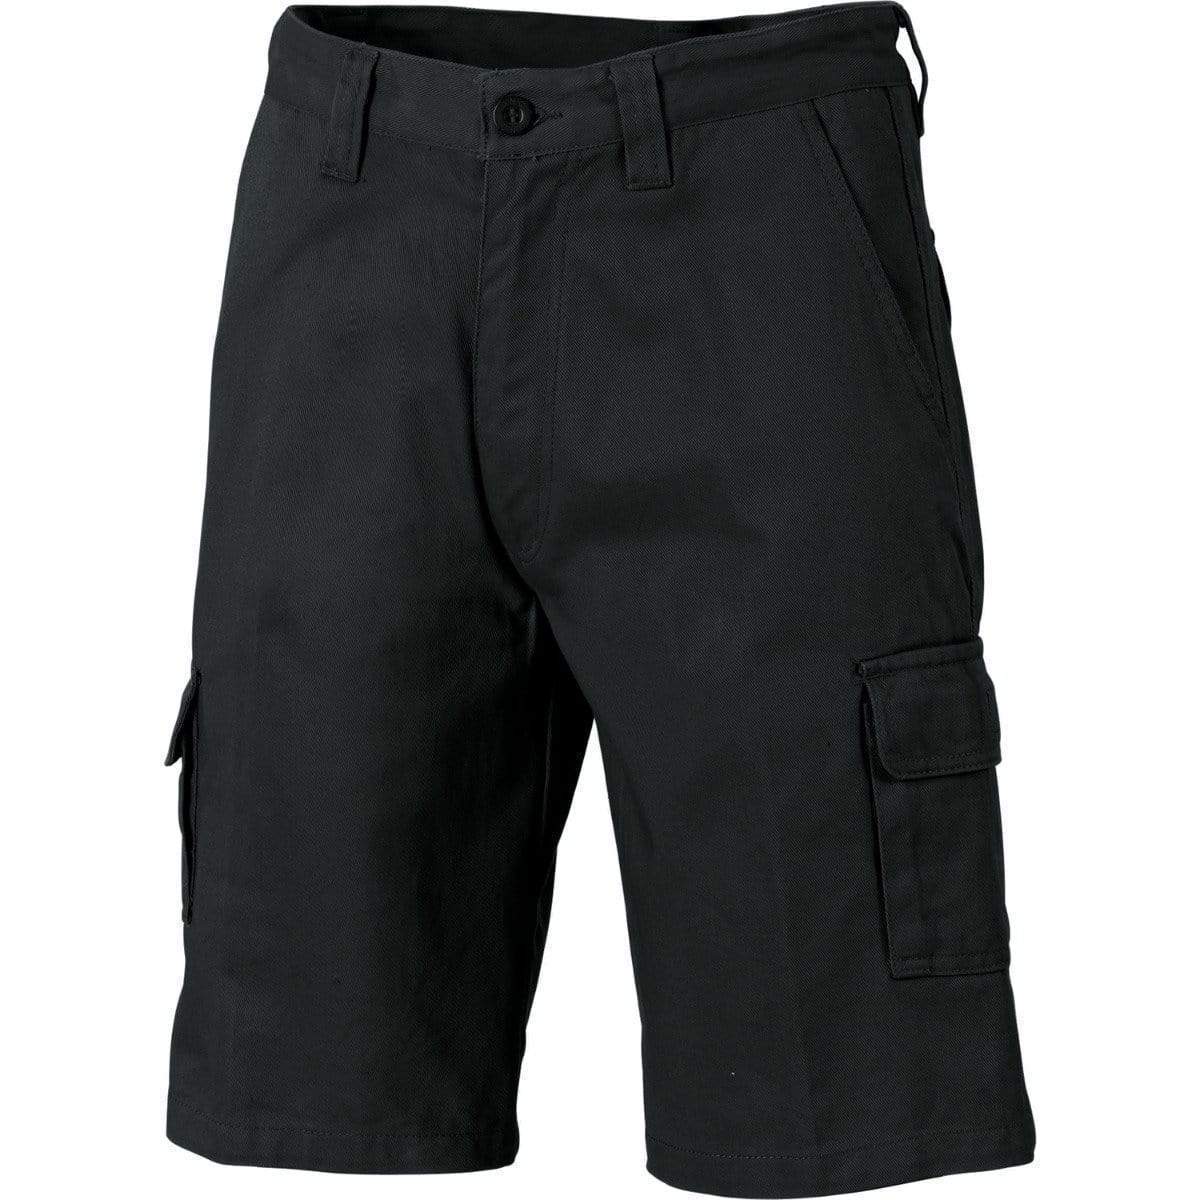 Dnc Workwear Cotton Drill Cargo Shorts - 3302 Work Wear DNC Workwear Black 72R 